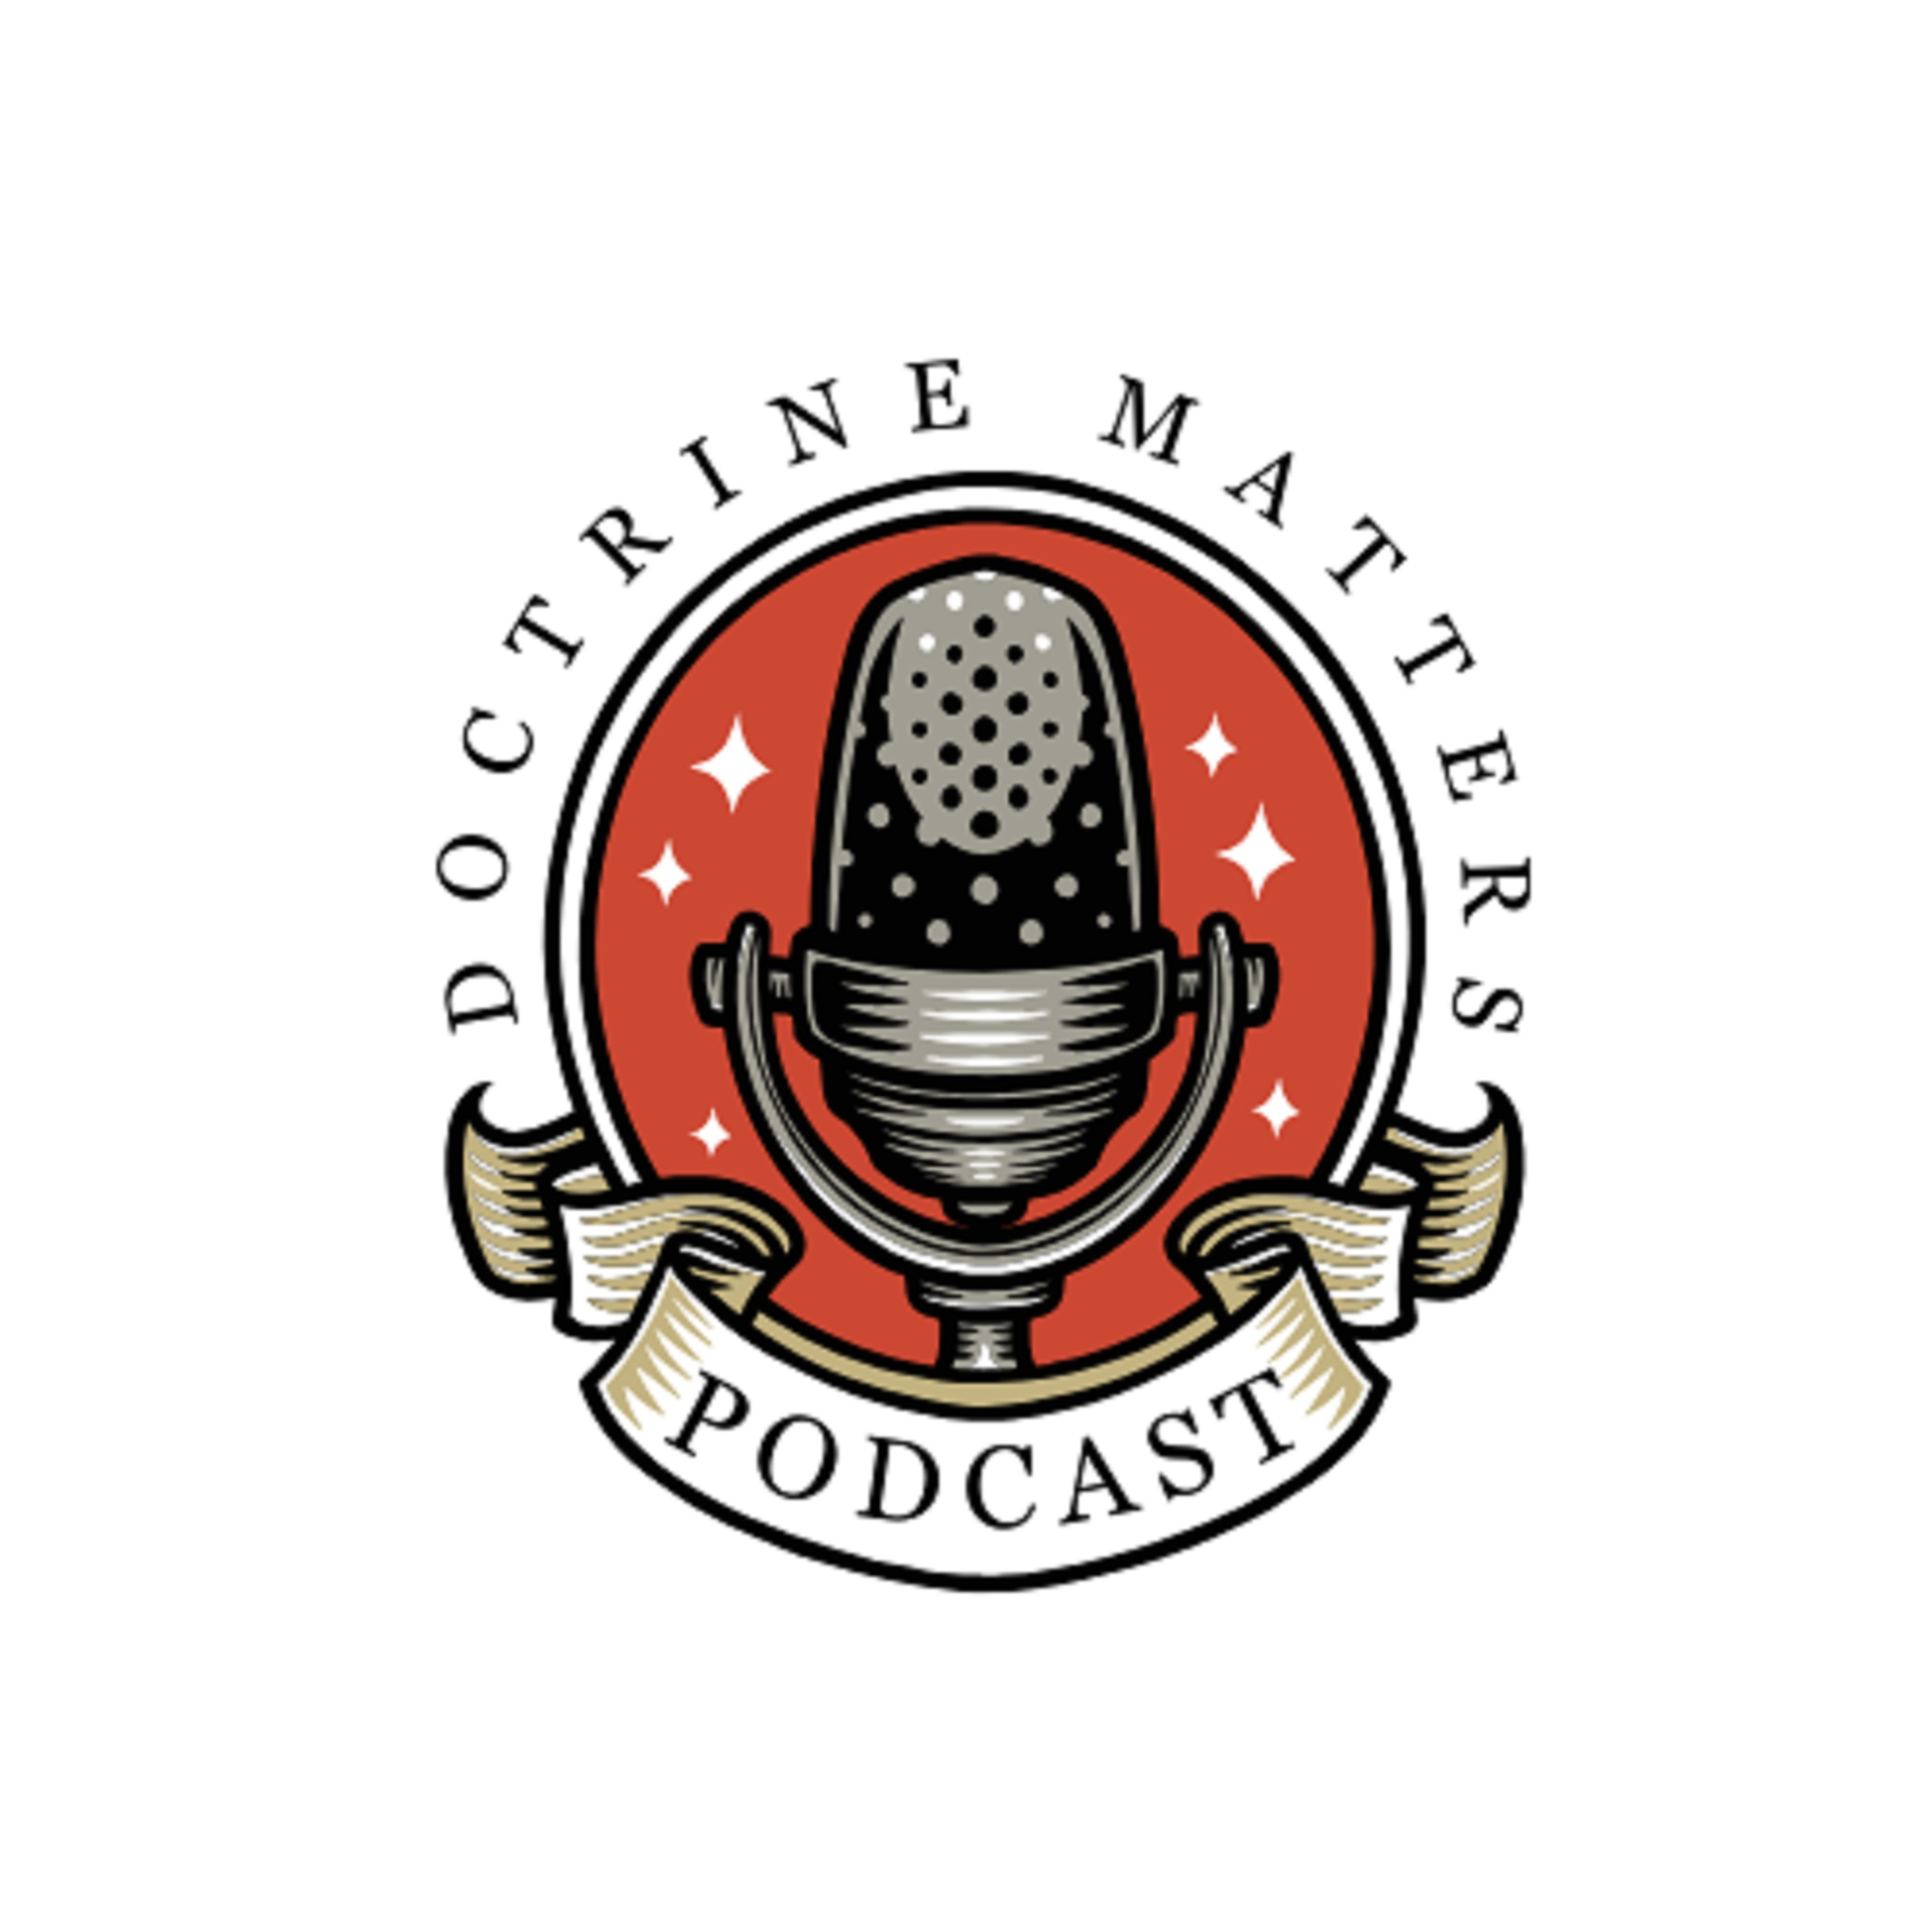 Doctrine Matters Podcast